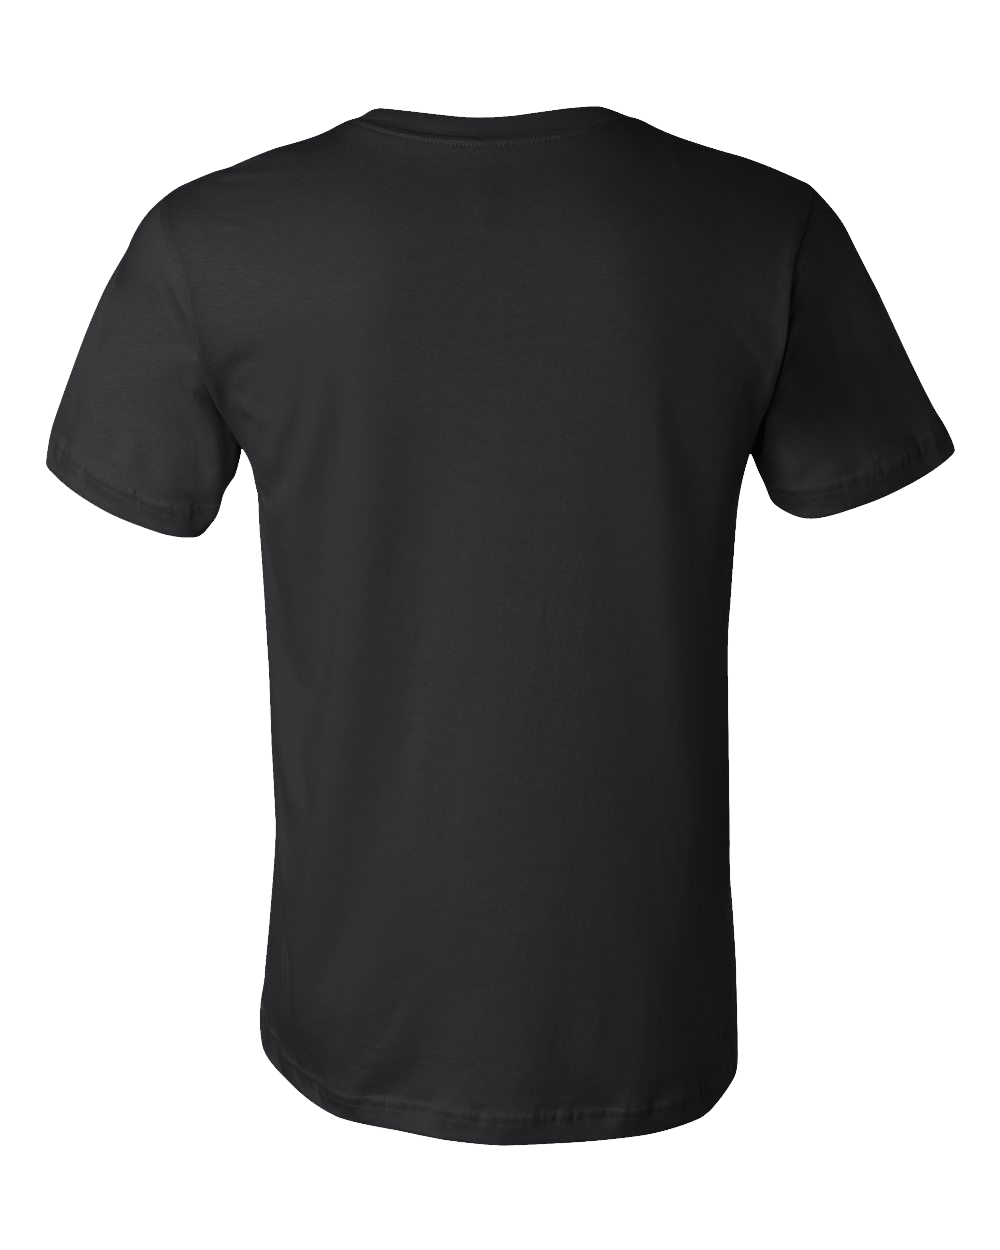 Standard Black Eaton, IN | Retro, Vintage Style Indiana Pride  T-shirt